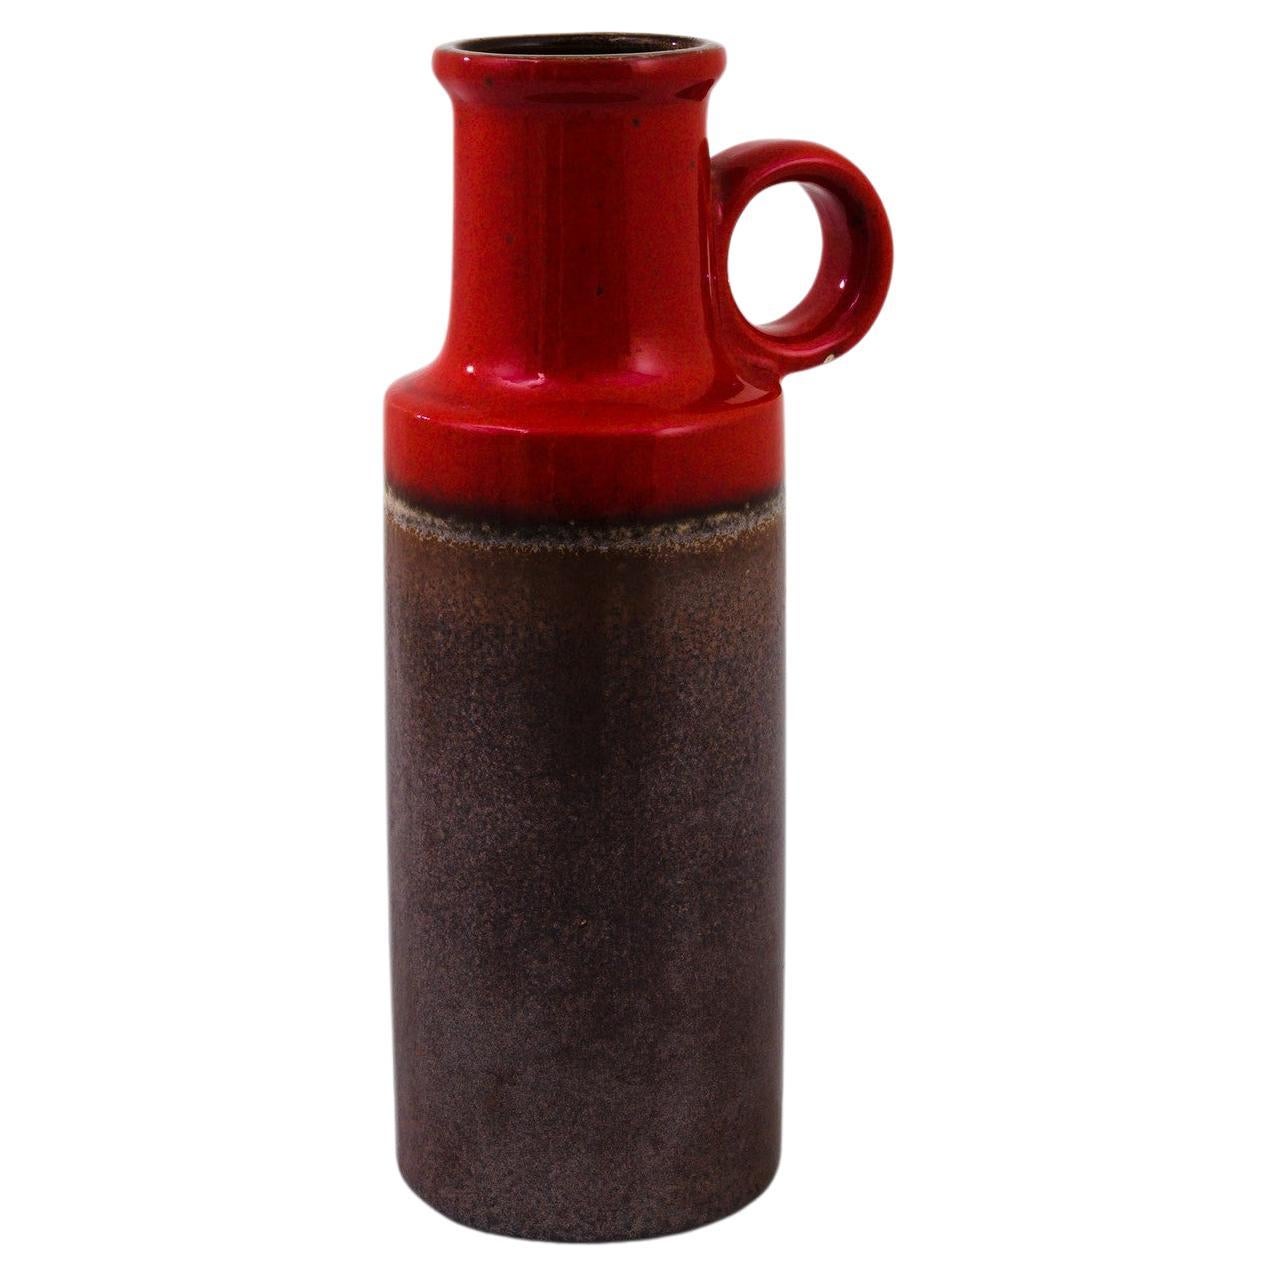 1960s Mid-Century Modern W. Germany Ceramic Vase For Sale